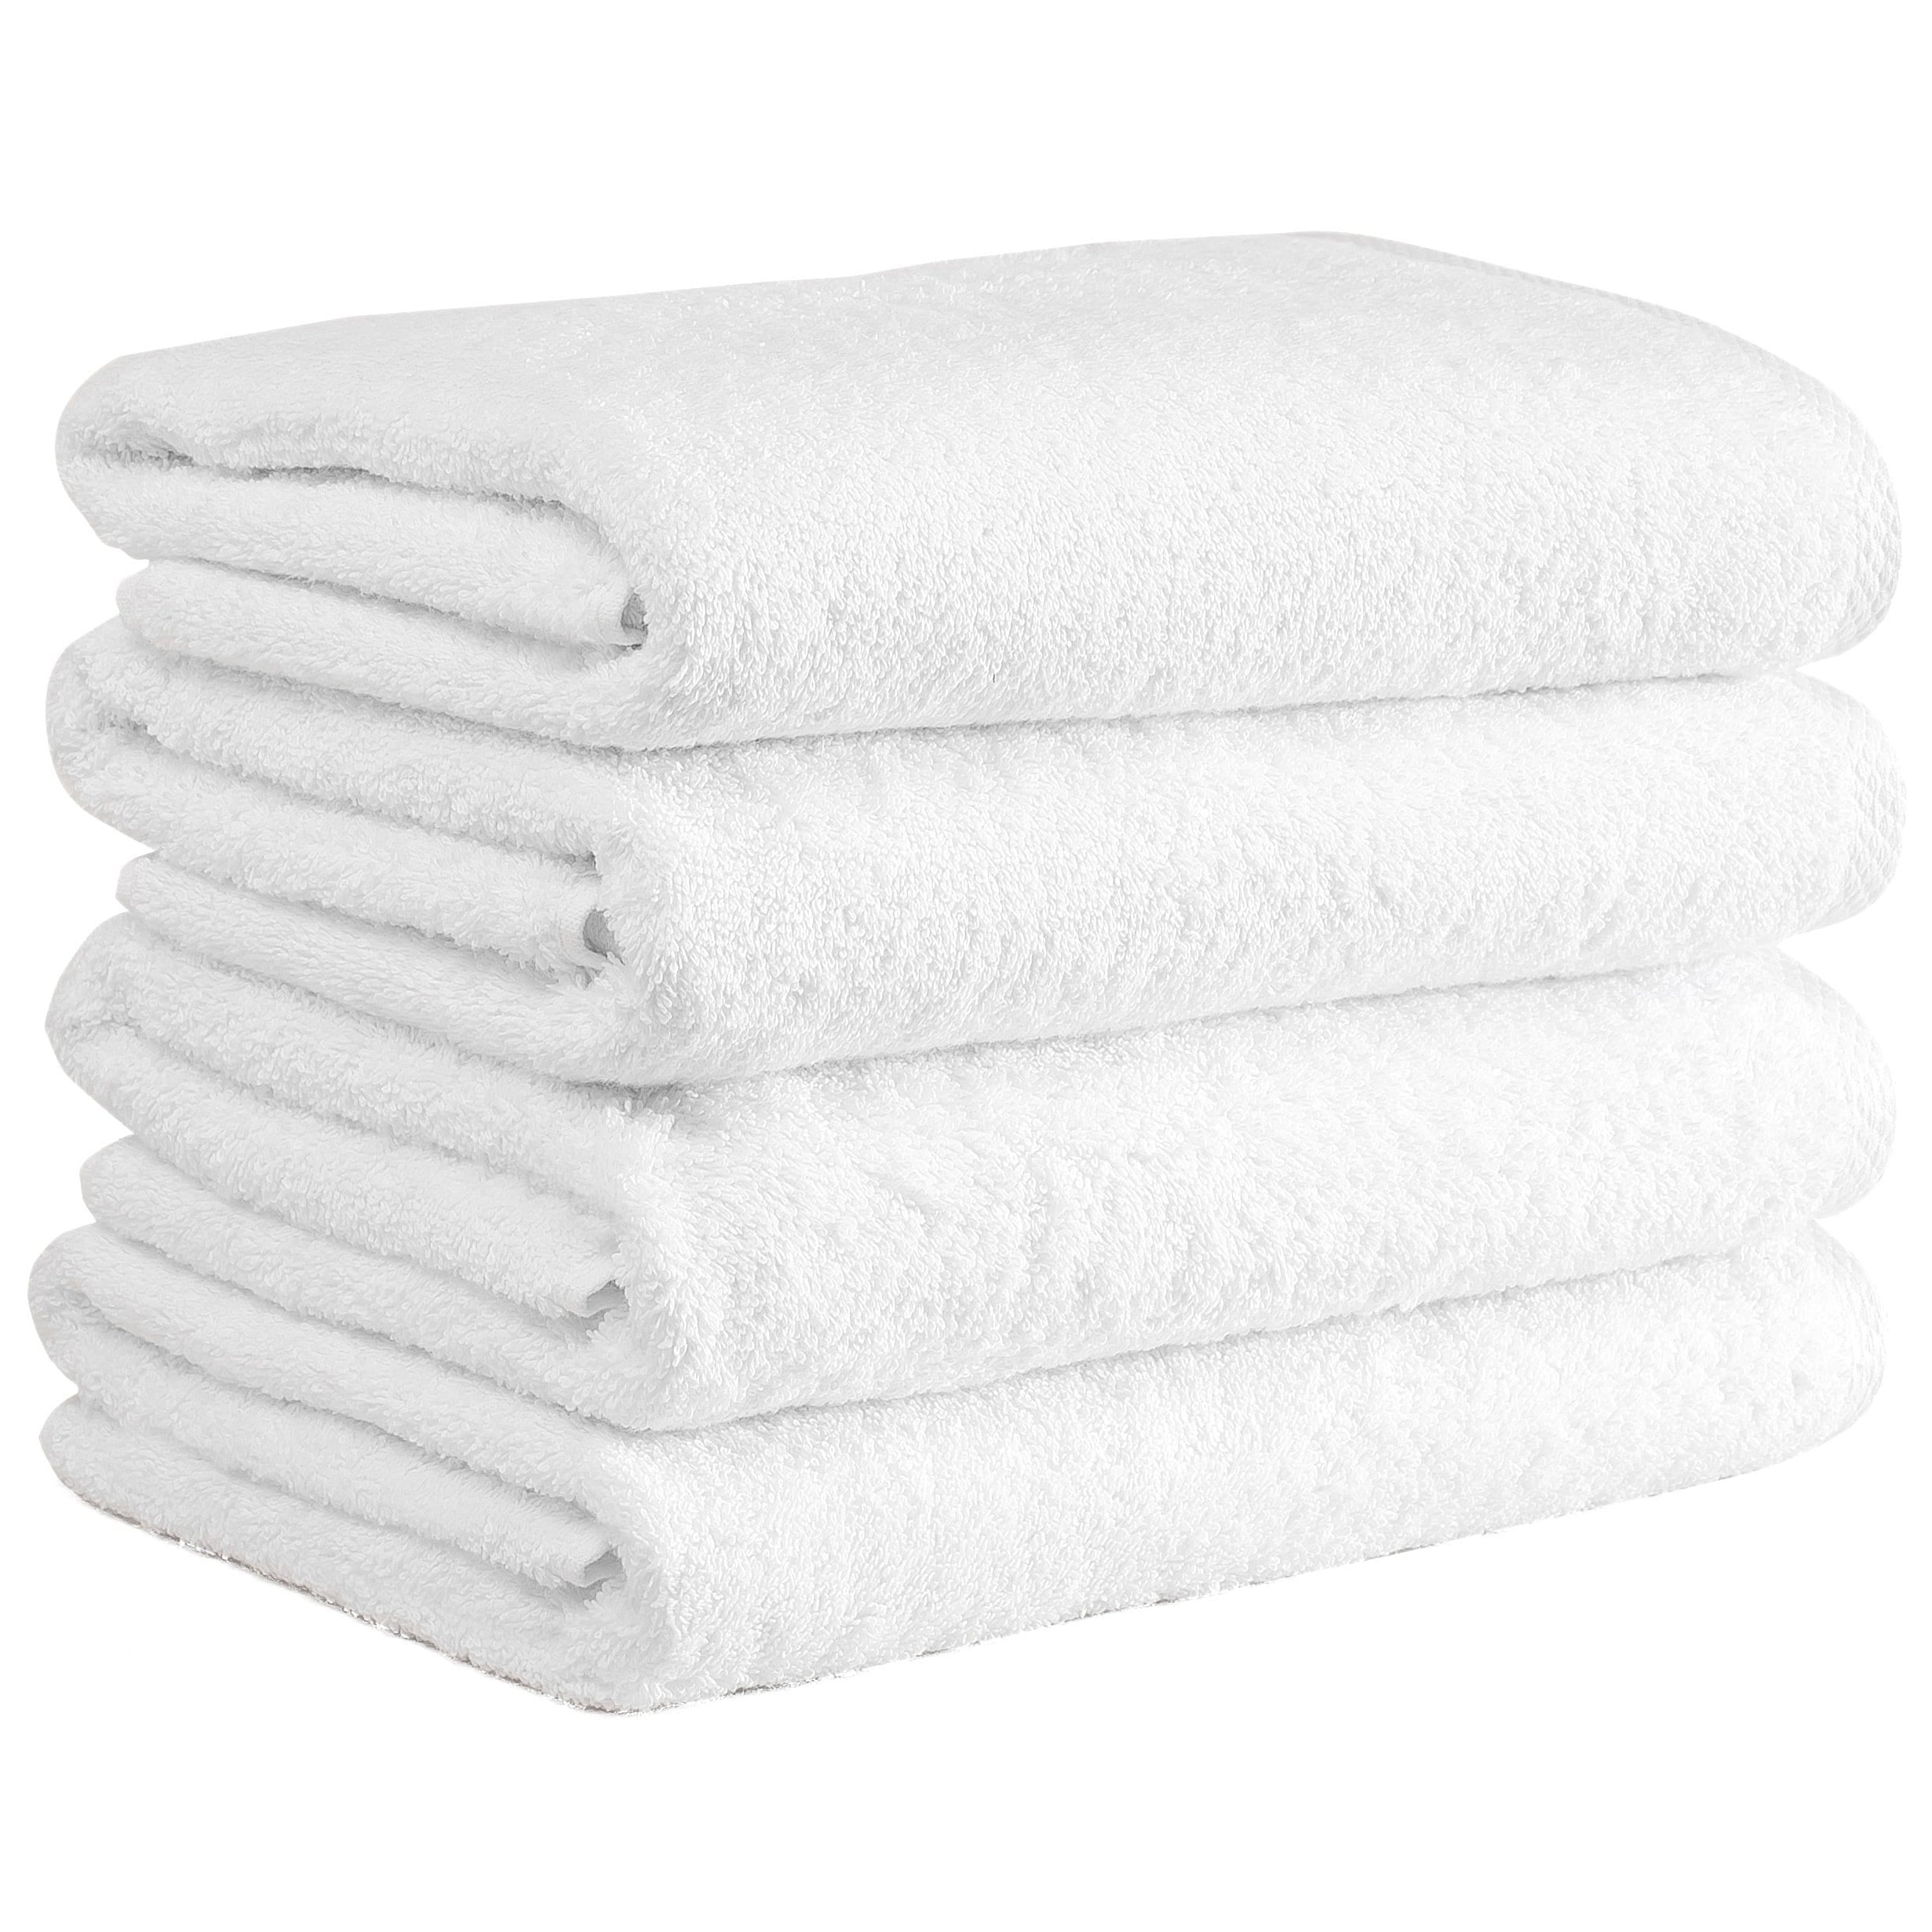 Classic Turkish Towel Classic Turkish Cotton Soft Gsm White Luxury